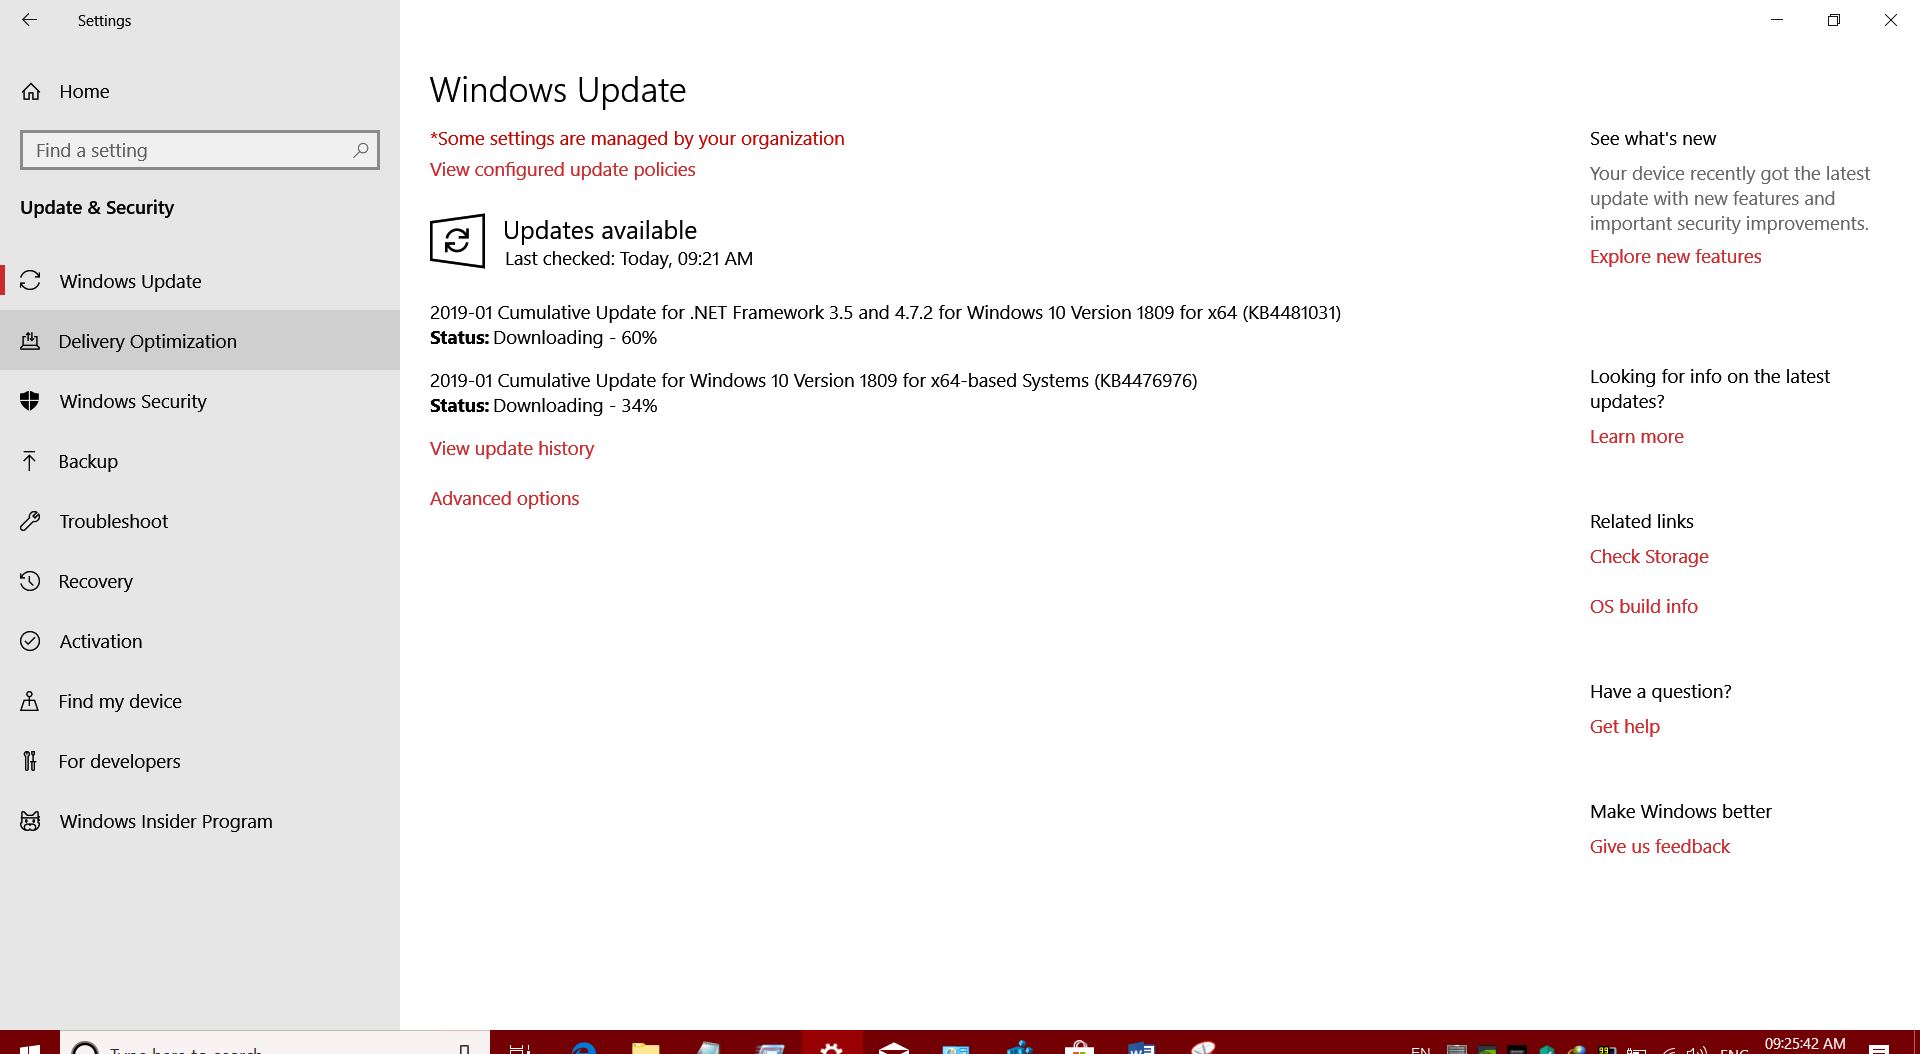 KB4476976 for Windows 10 version 1809 and Server 2019 released f3e23aa0-0306-4e12-8071-cb69f65c5cea?upload=true.jpg